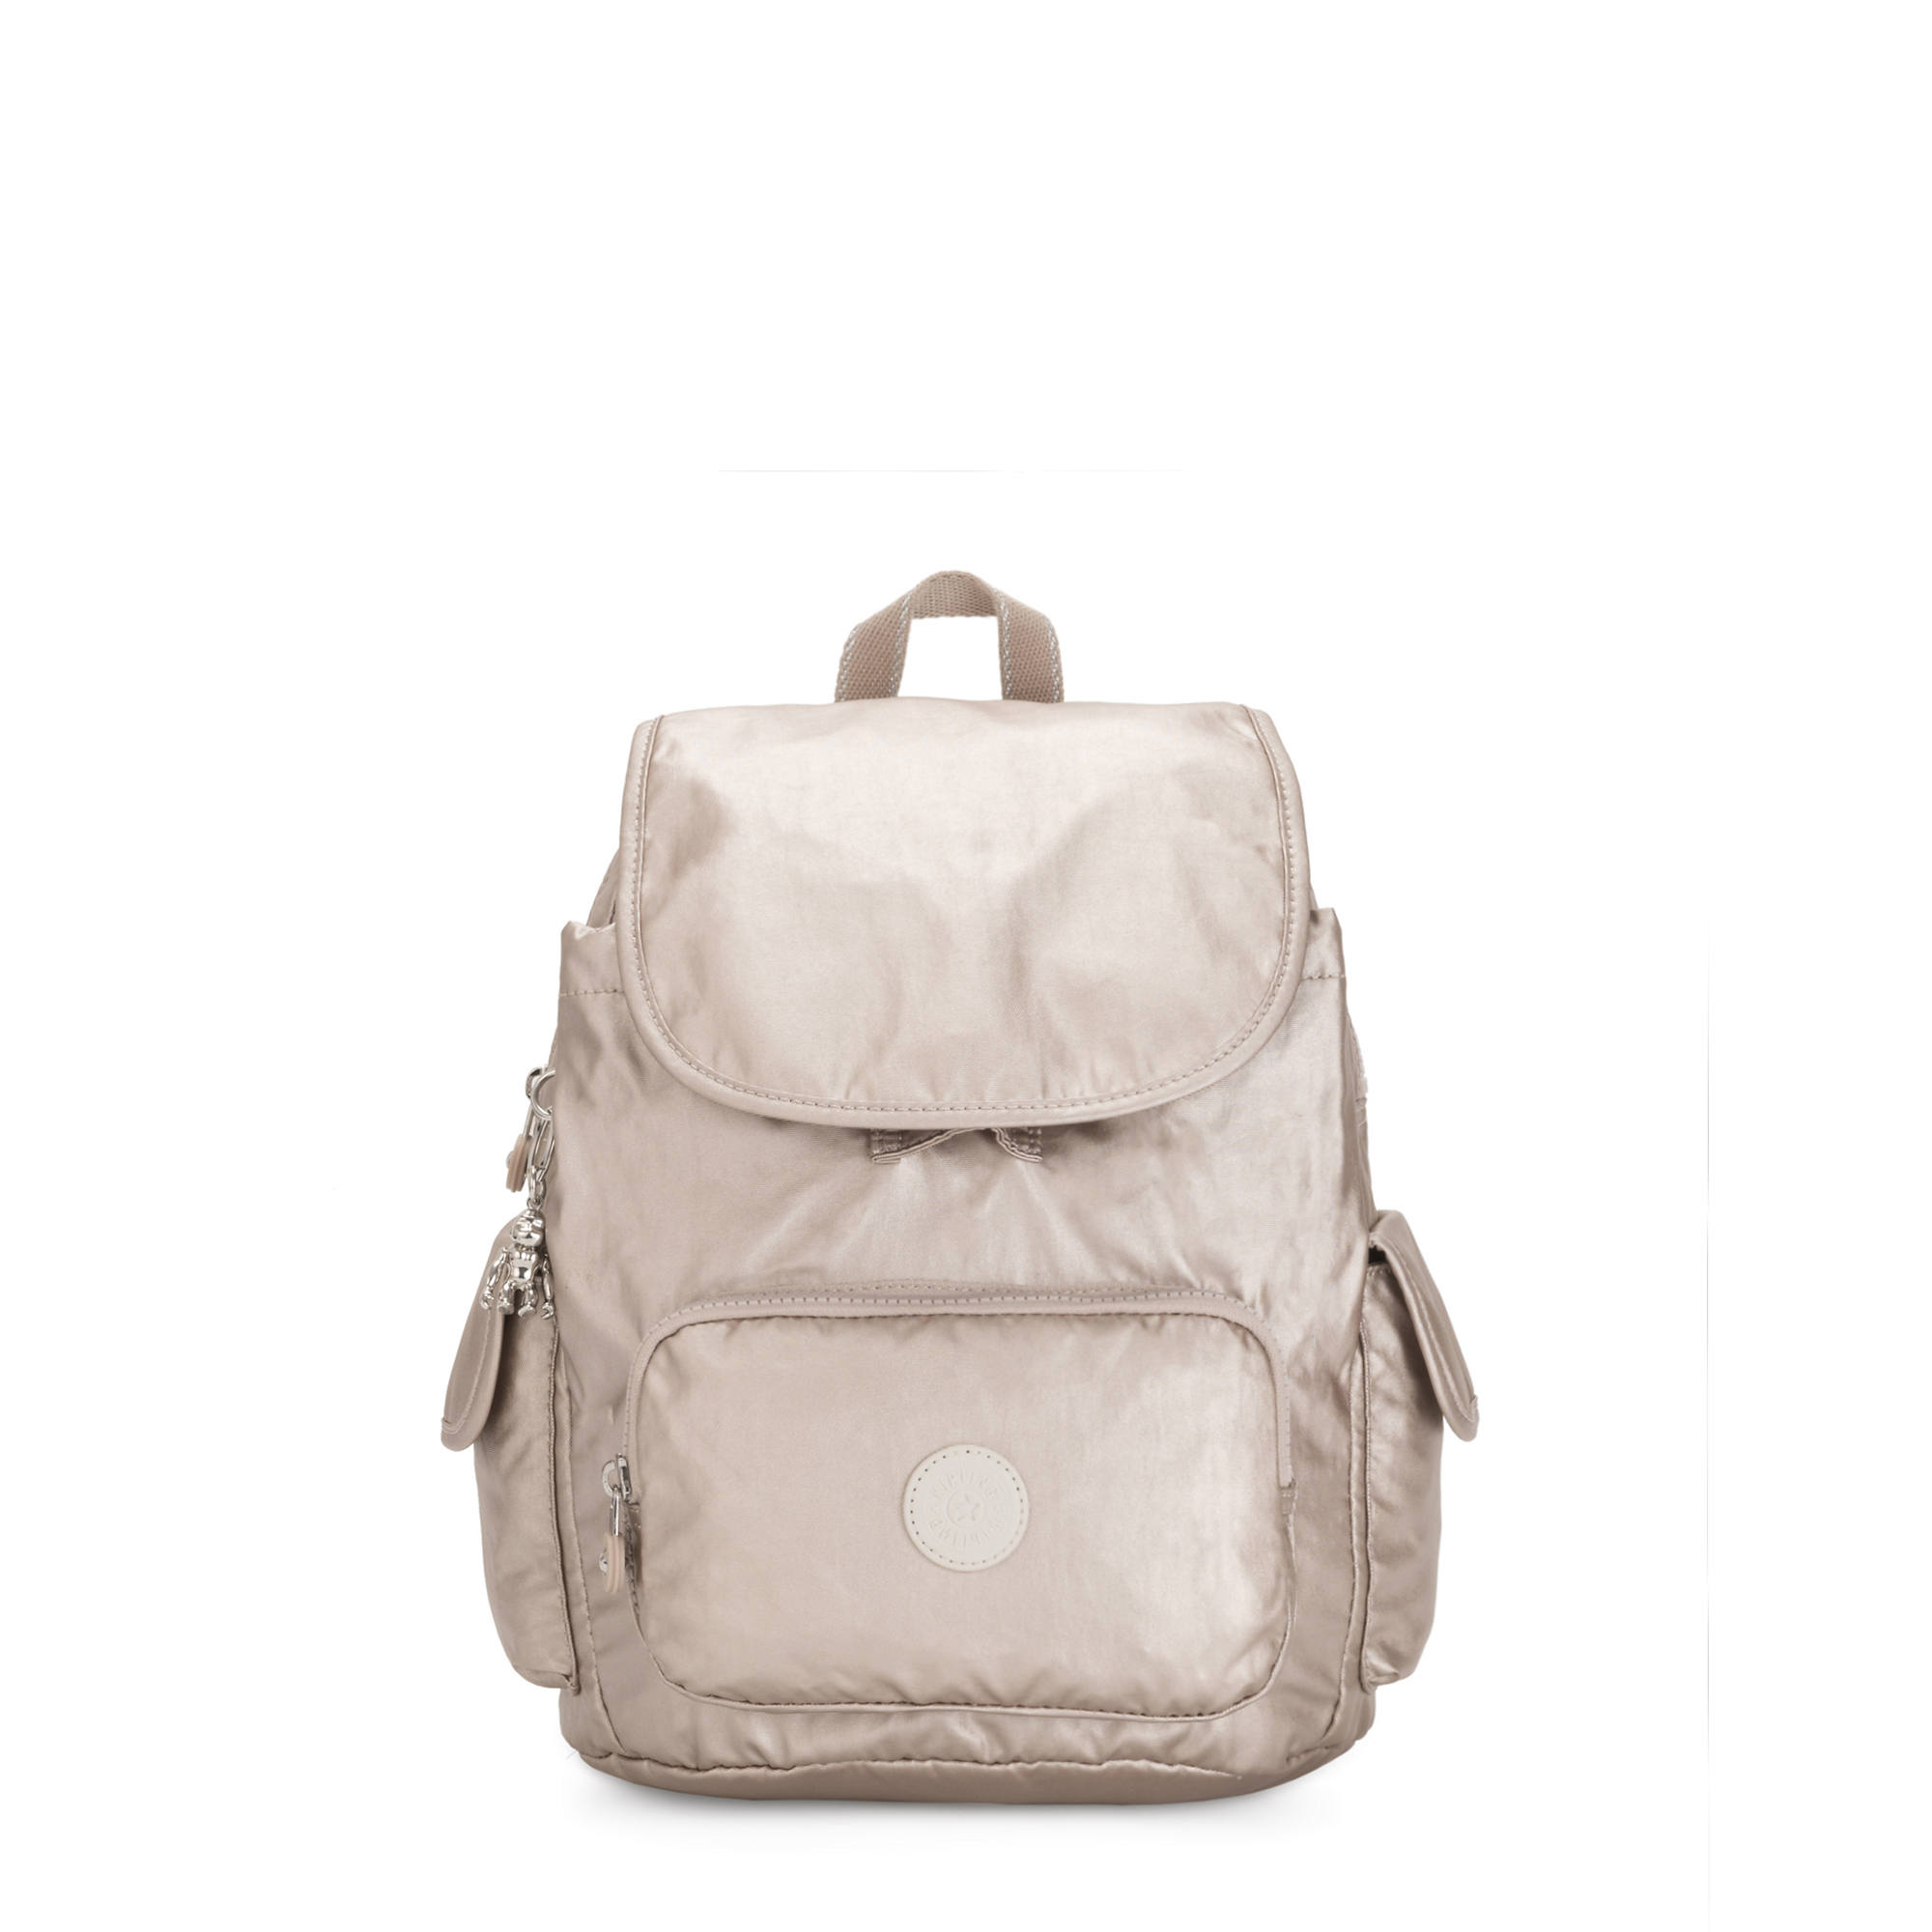 Kipling Women's City Small Fashion Backpack Water Resistant eBay